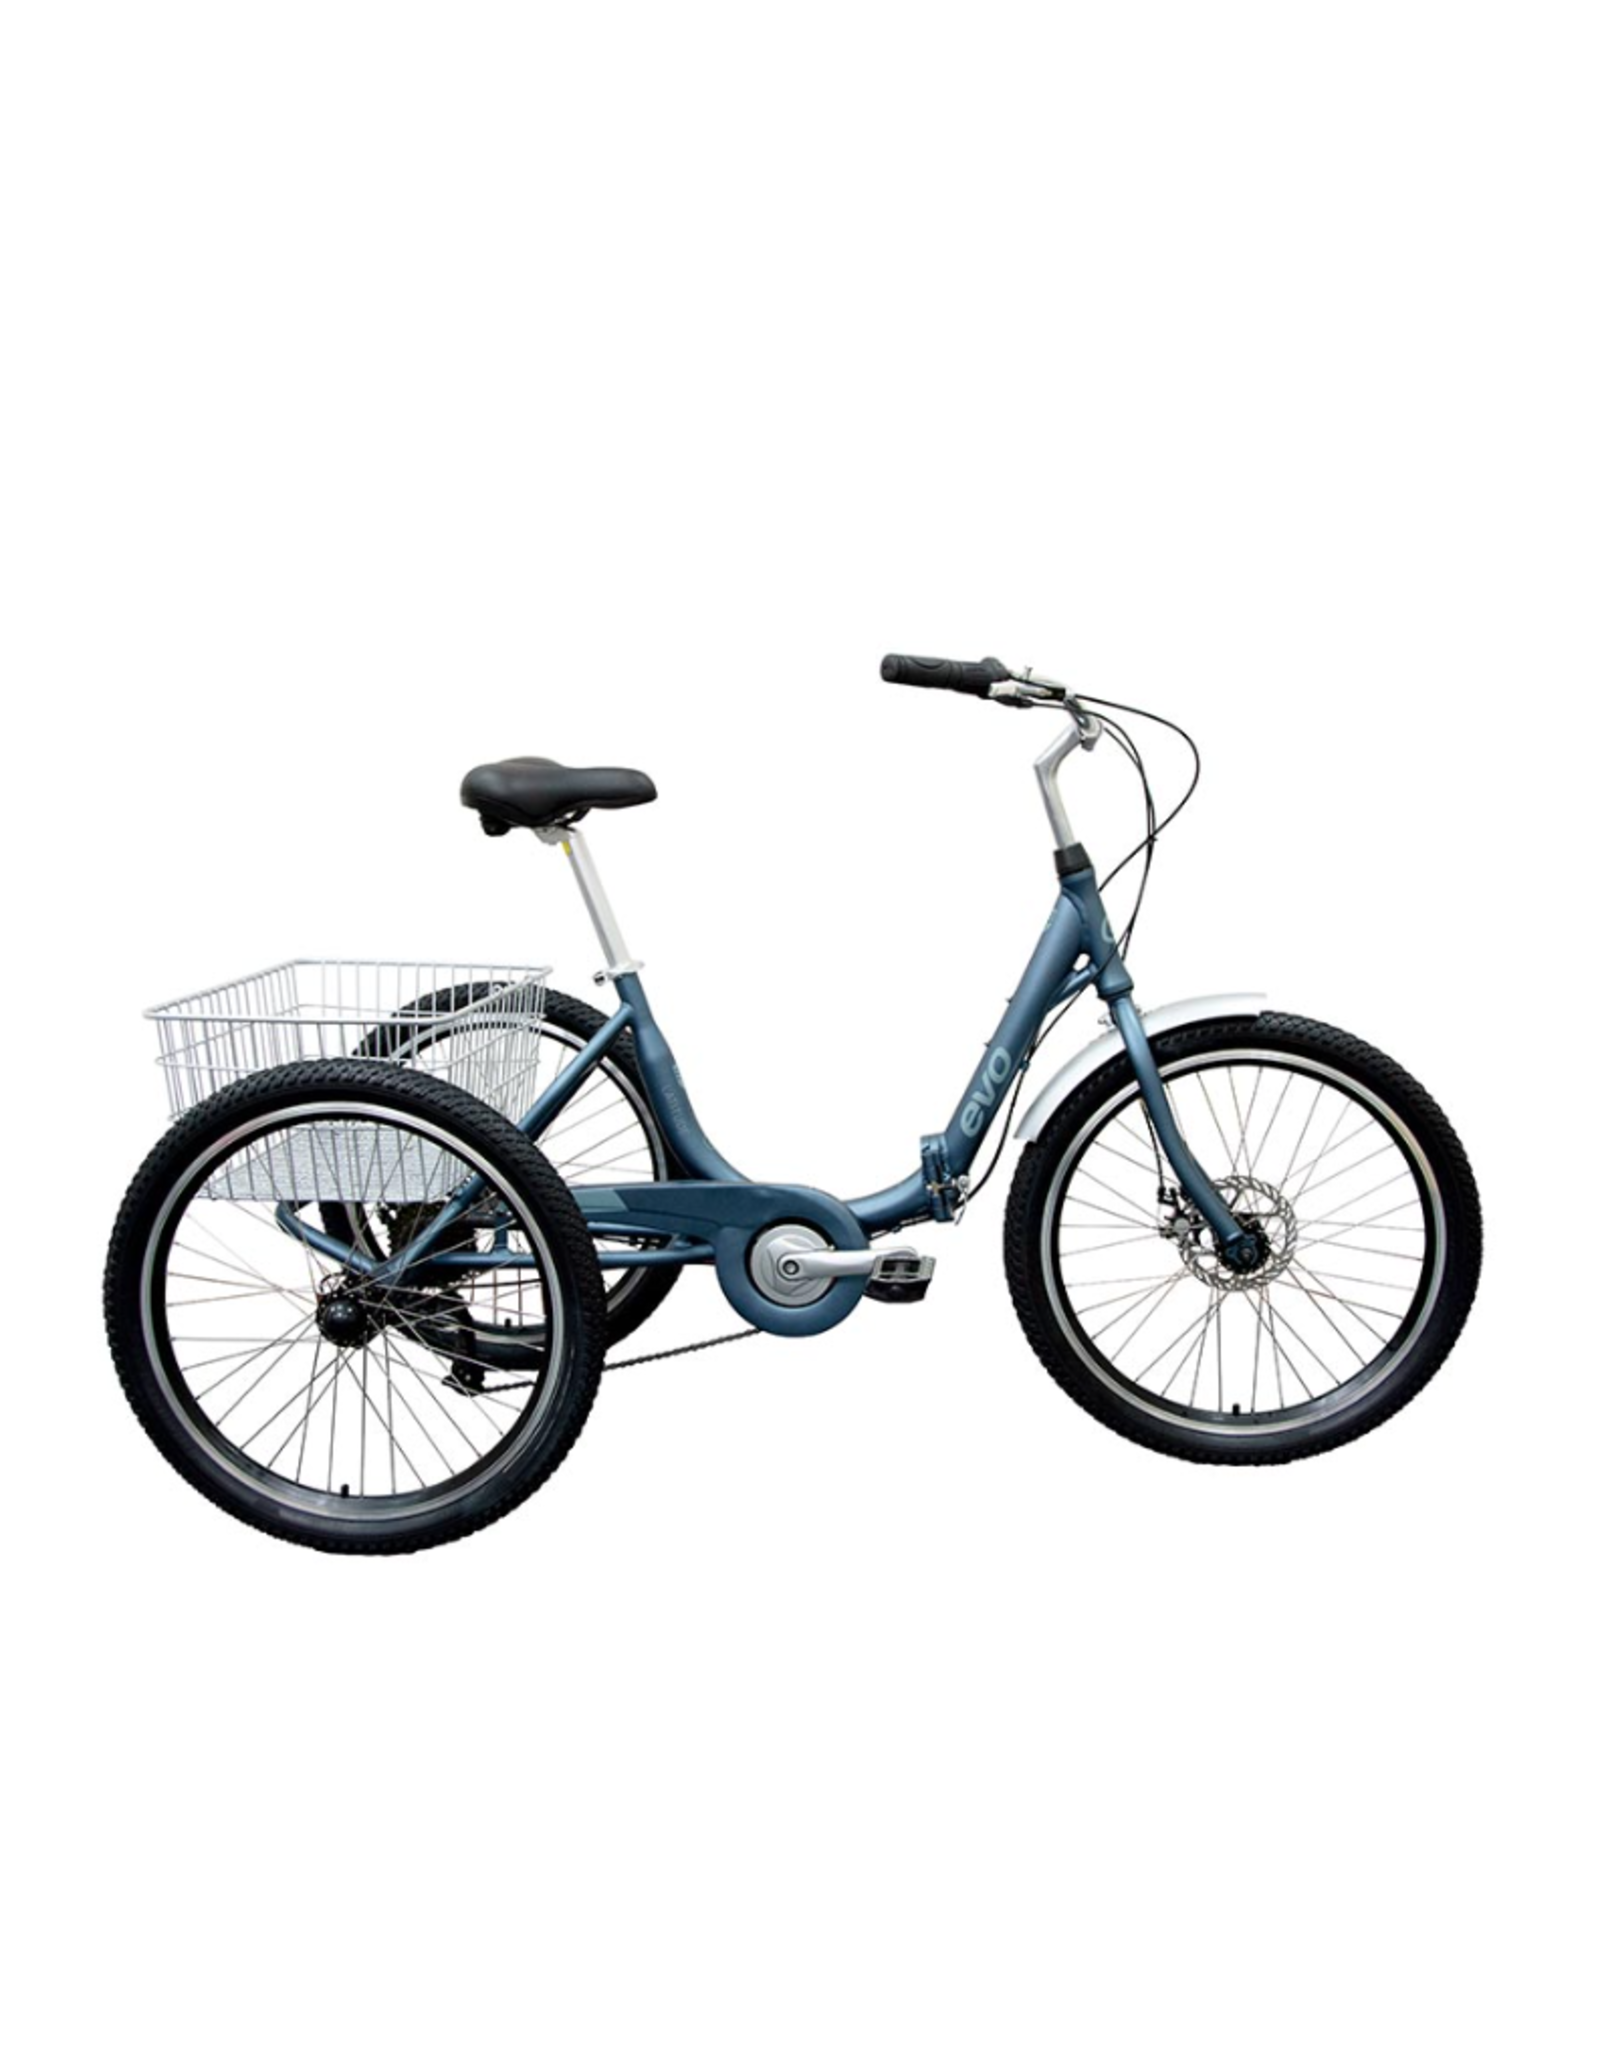 Evo EVO, Latitude G2 Trike, Adult Tricycle